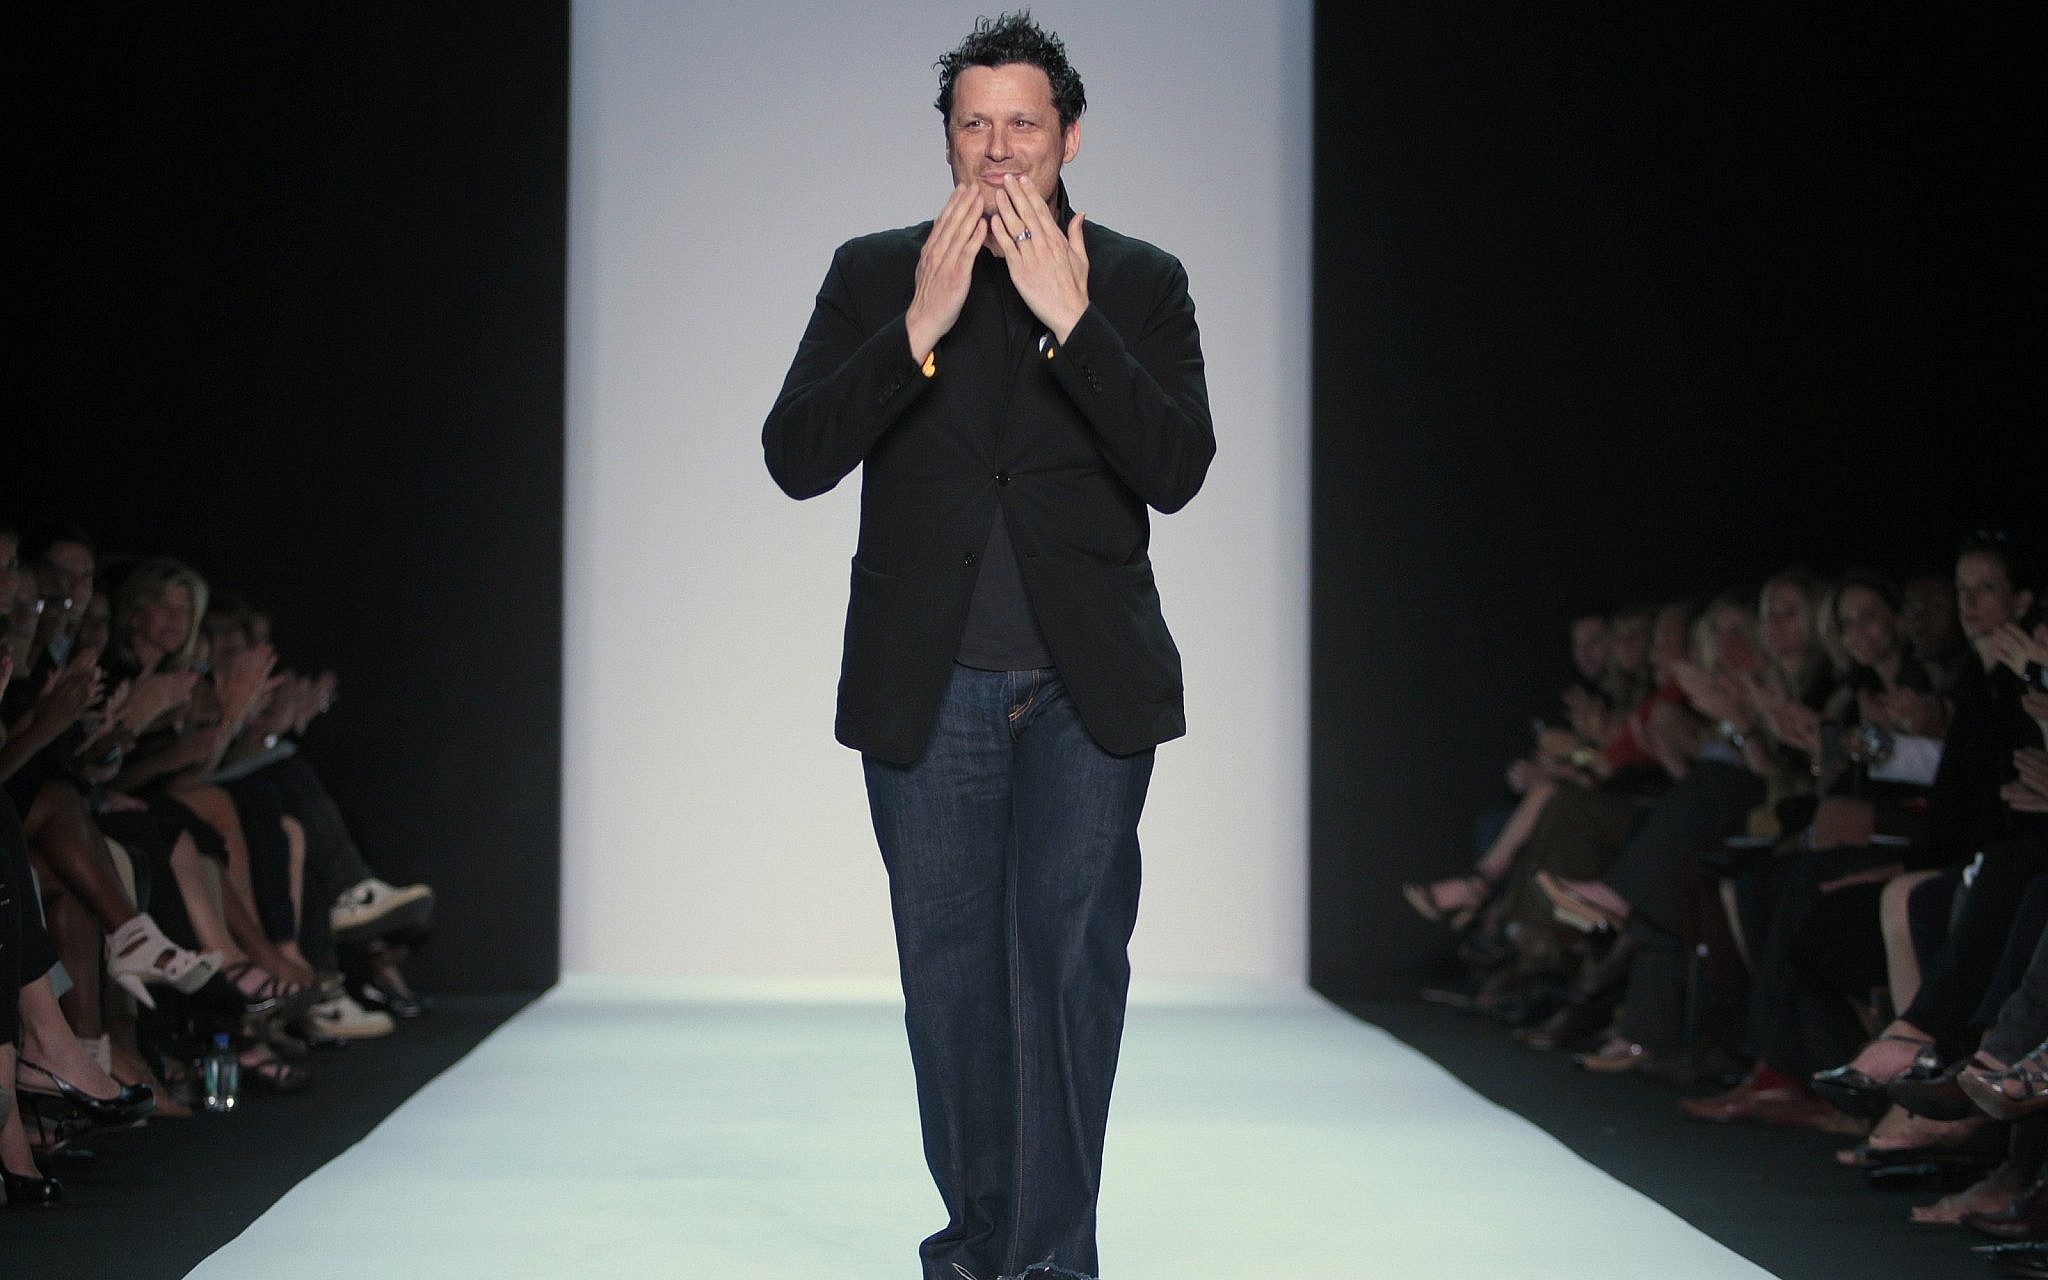 Fashion Designer Isaac Mizrahi's Sources of Inspiration